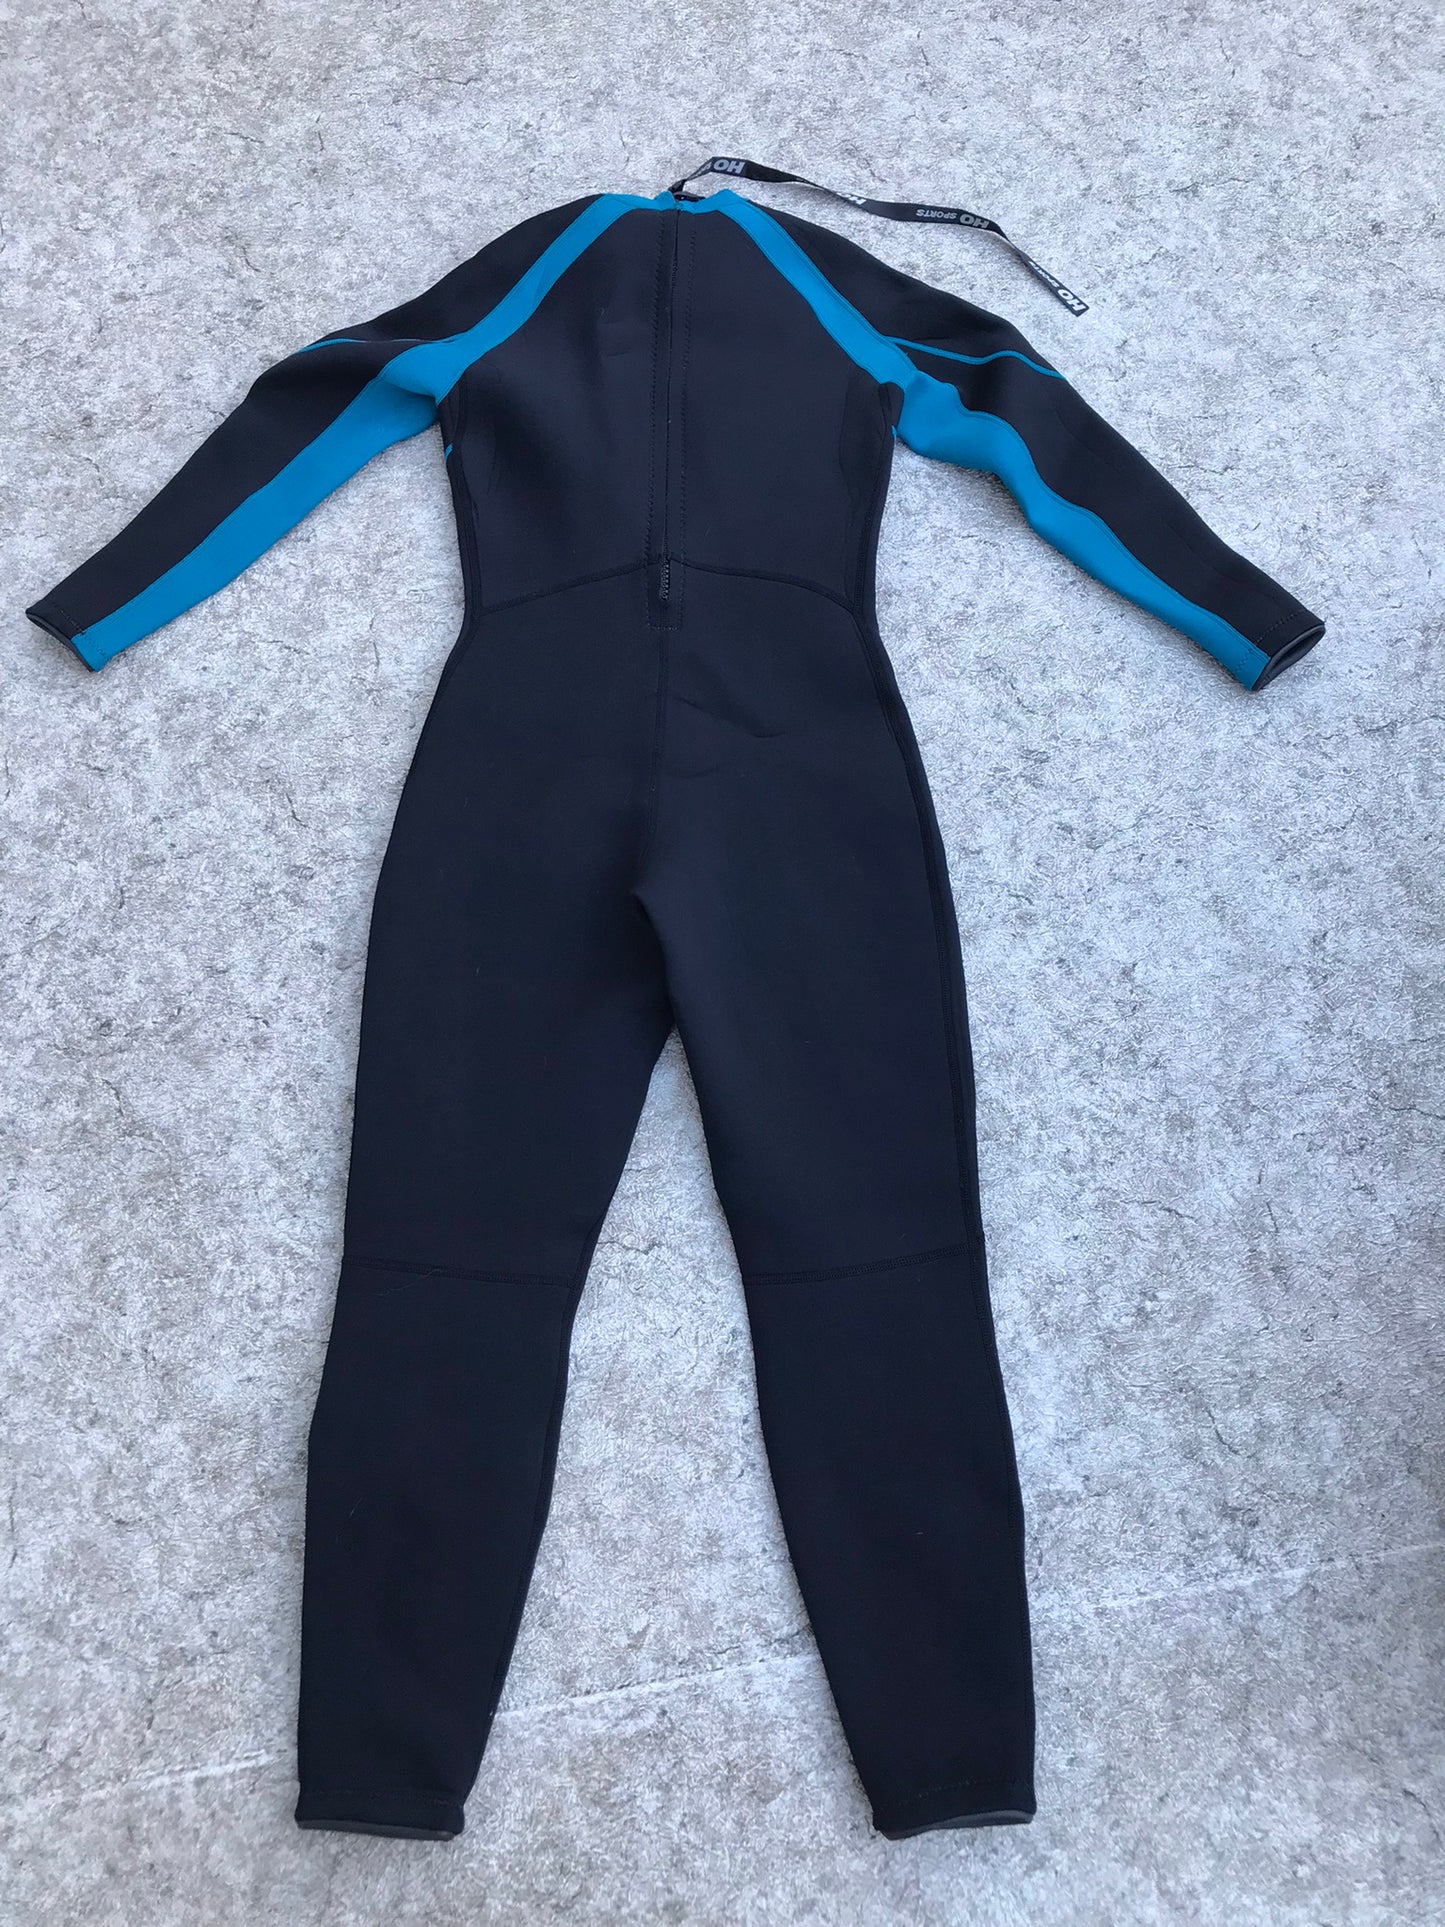 Wetsuit Ladies Size 13-14 Full HO Sports 3-4 mm Black Blue Excellent